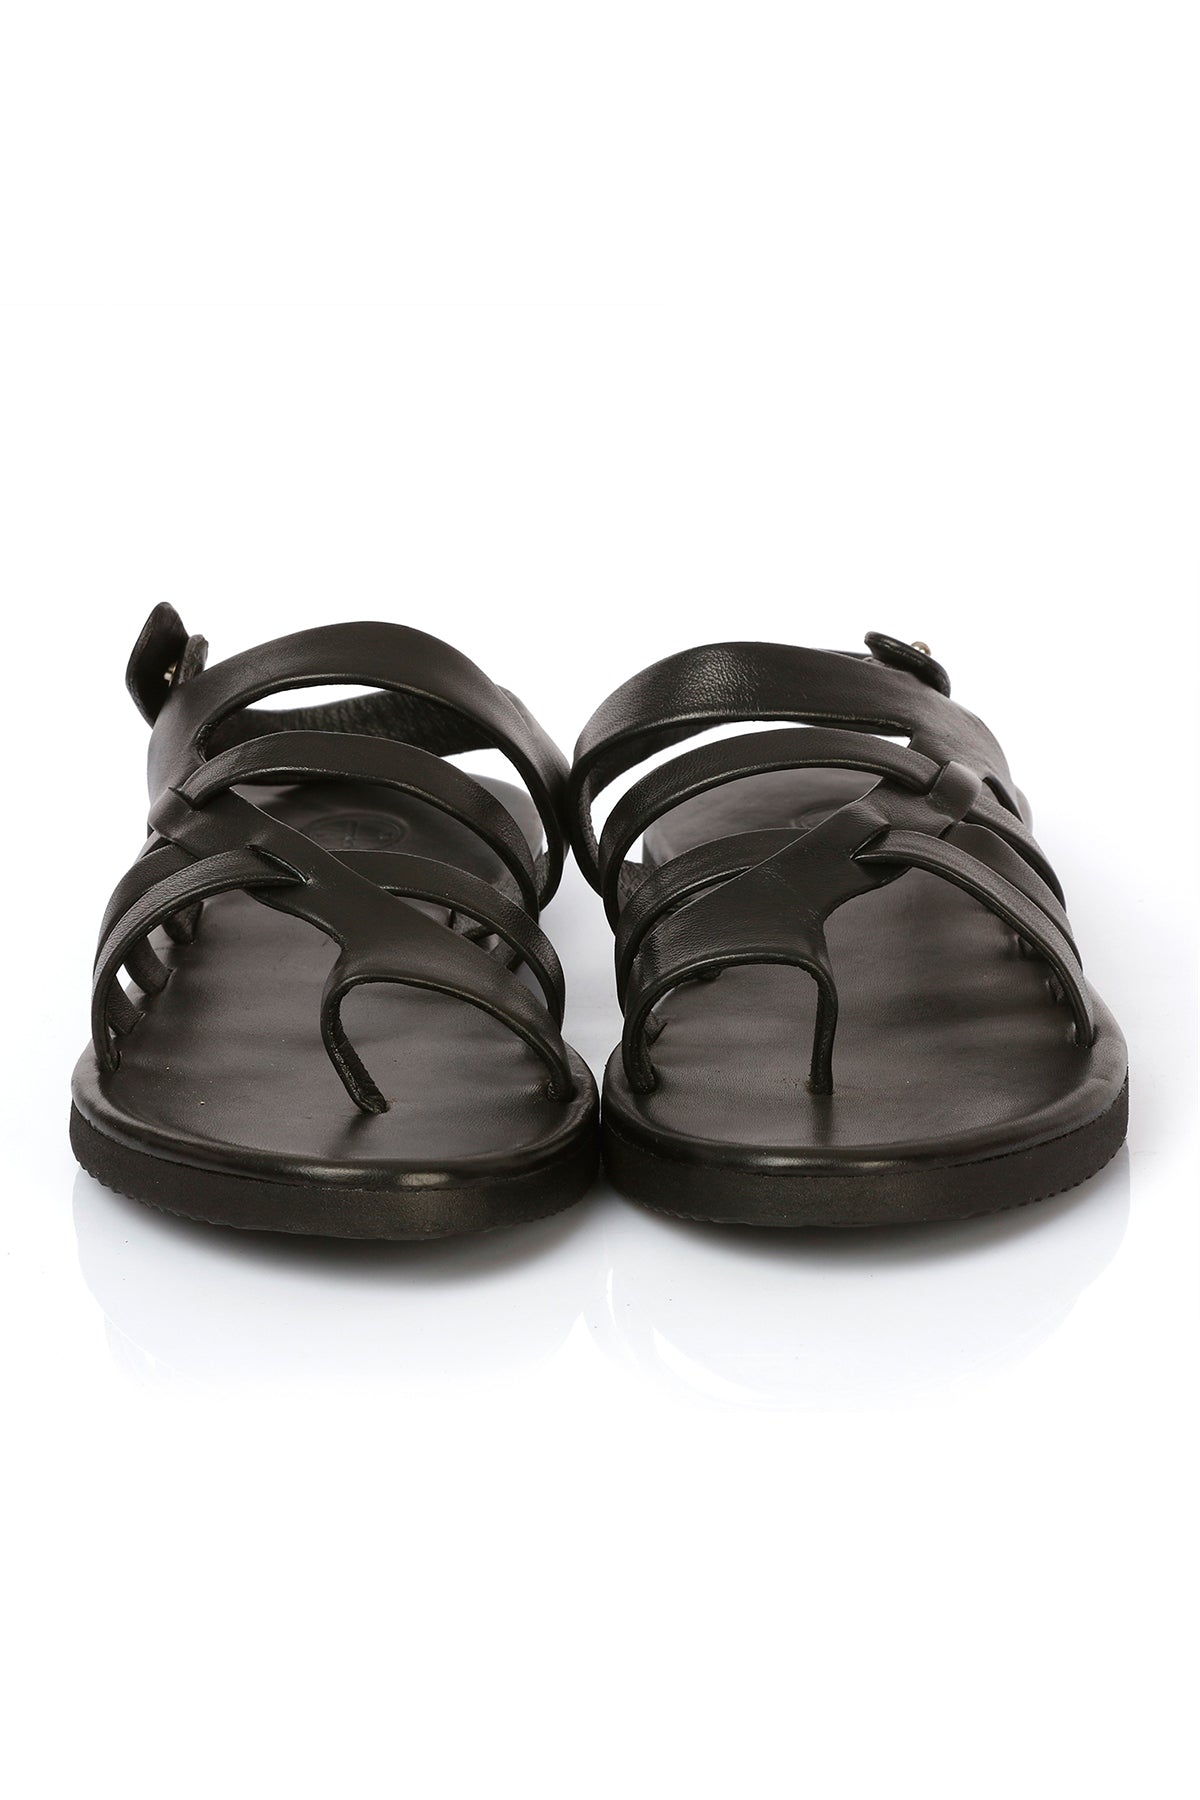 Black Handmade Sandals